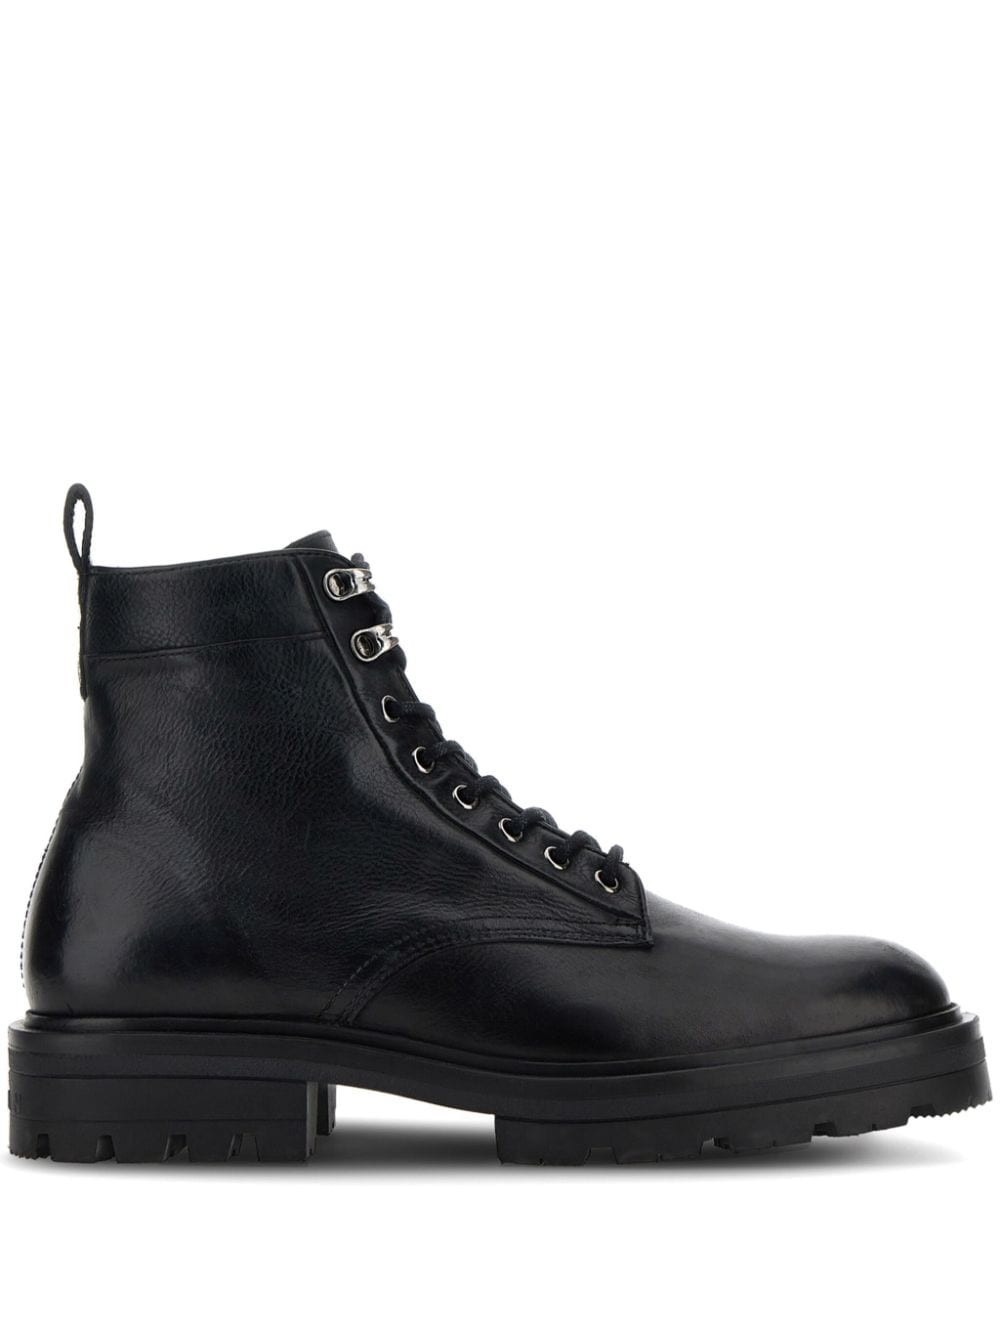 Hogan H673 leather boots Black